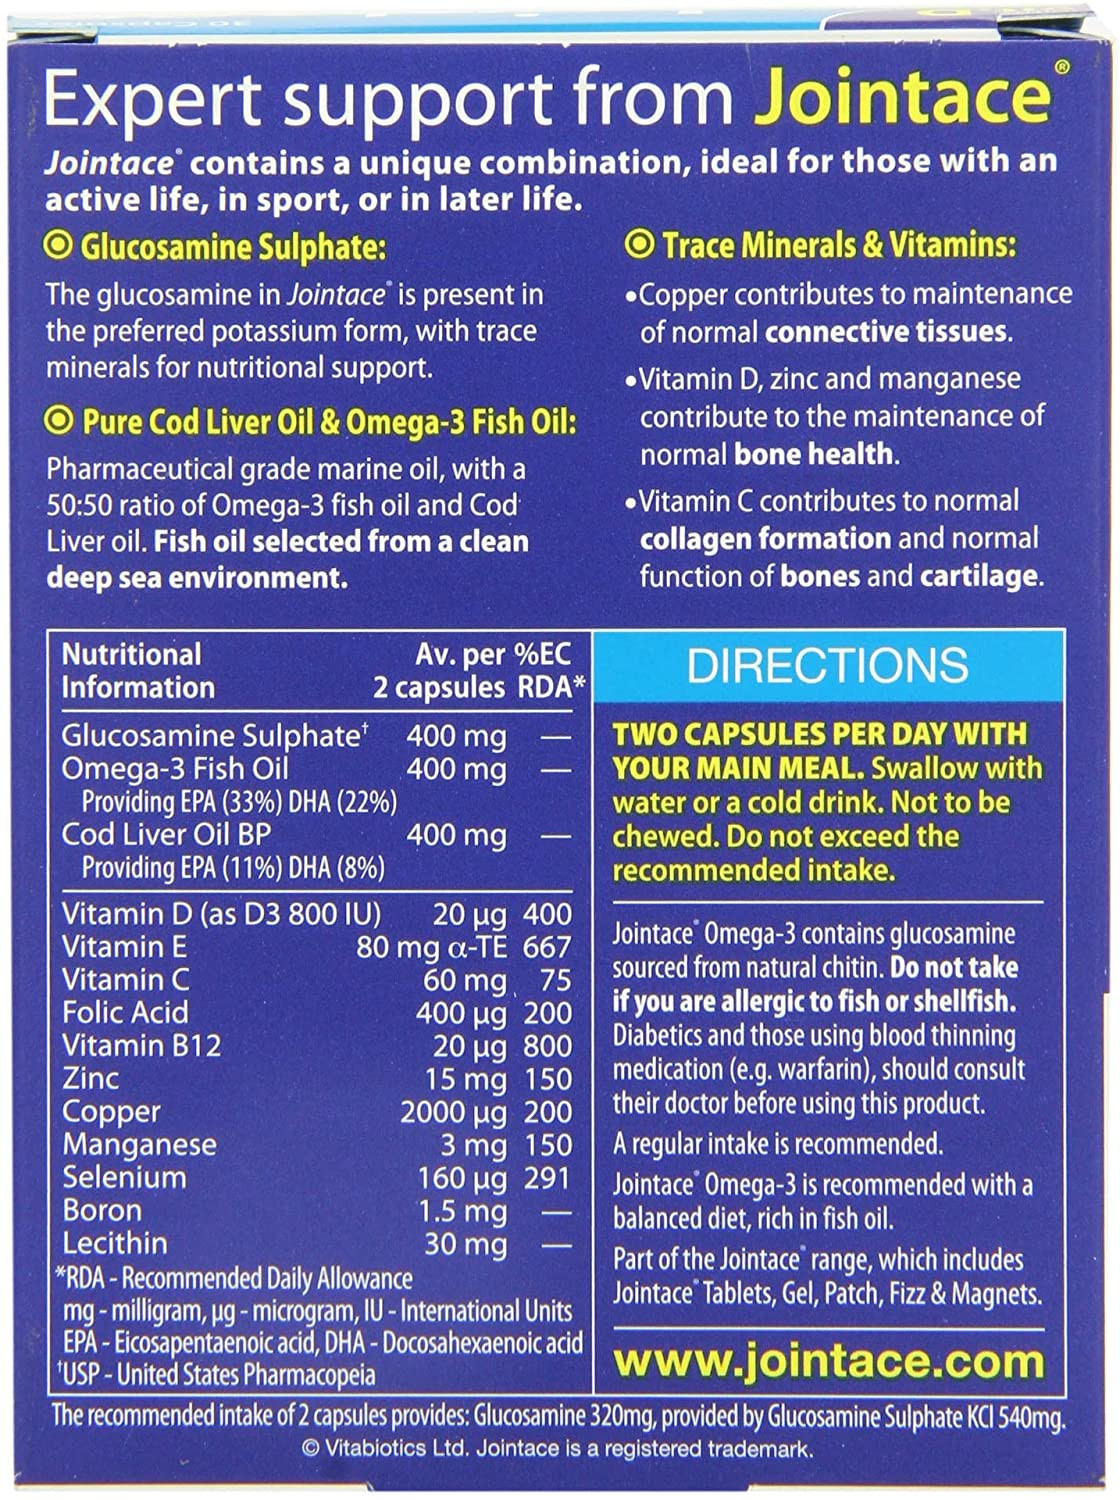 Vitabiotics Jointace Omega 3 and Glucosamine Capsules - 30 Capsules